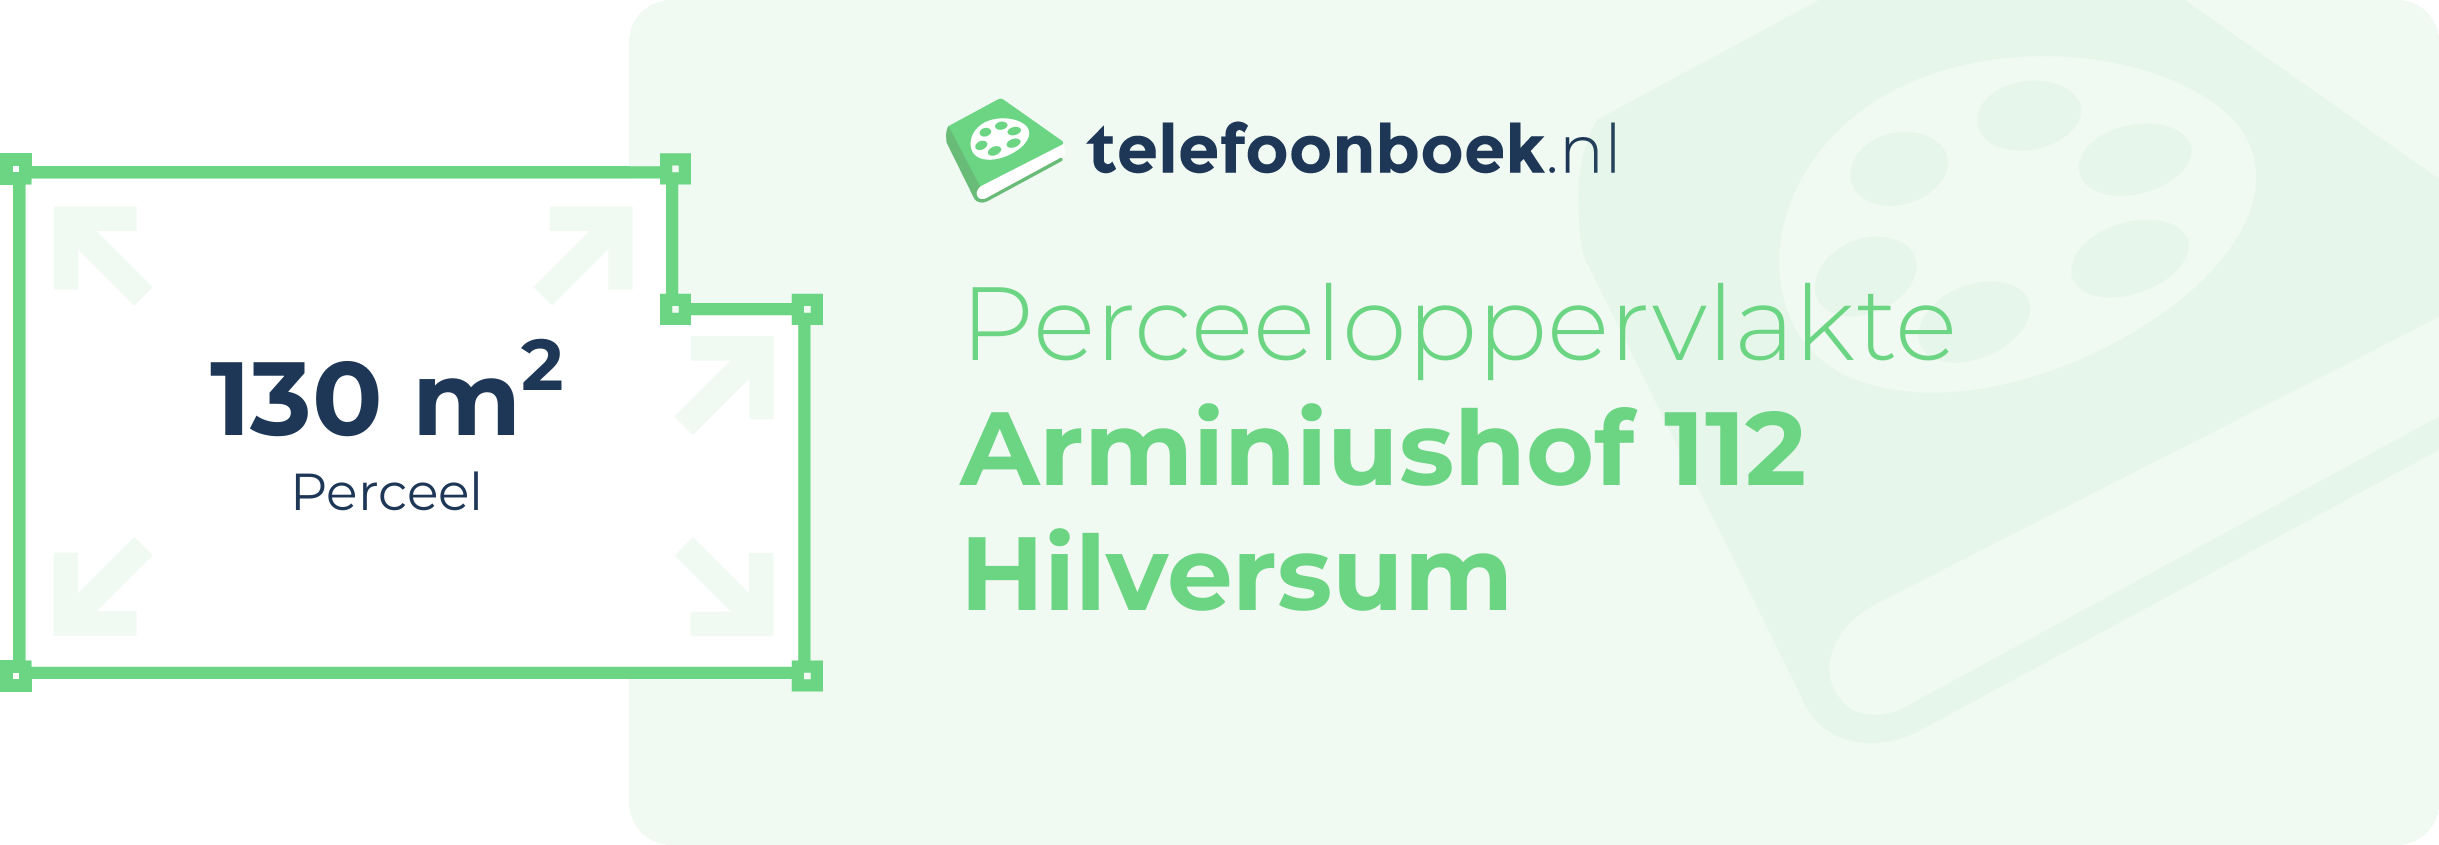 Perceeloppervlakte Arminiushof 112 Hilversum